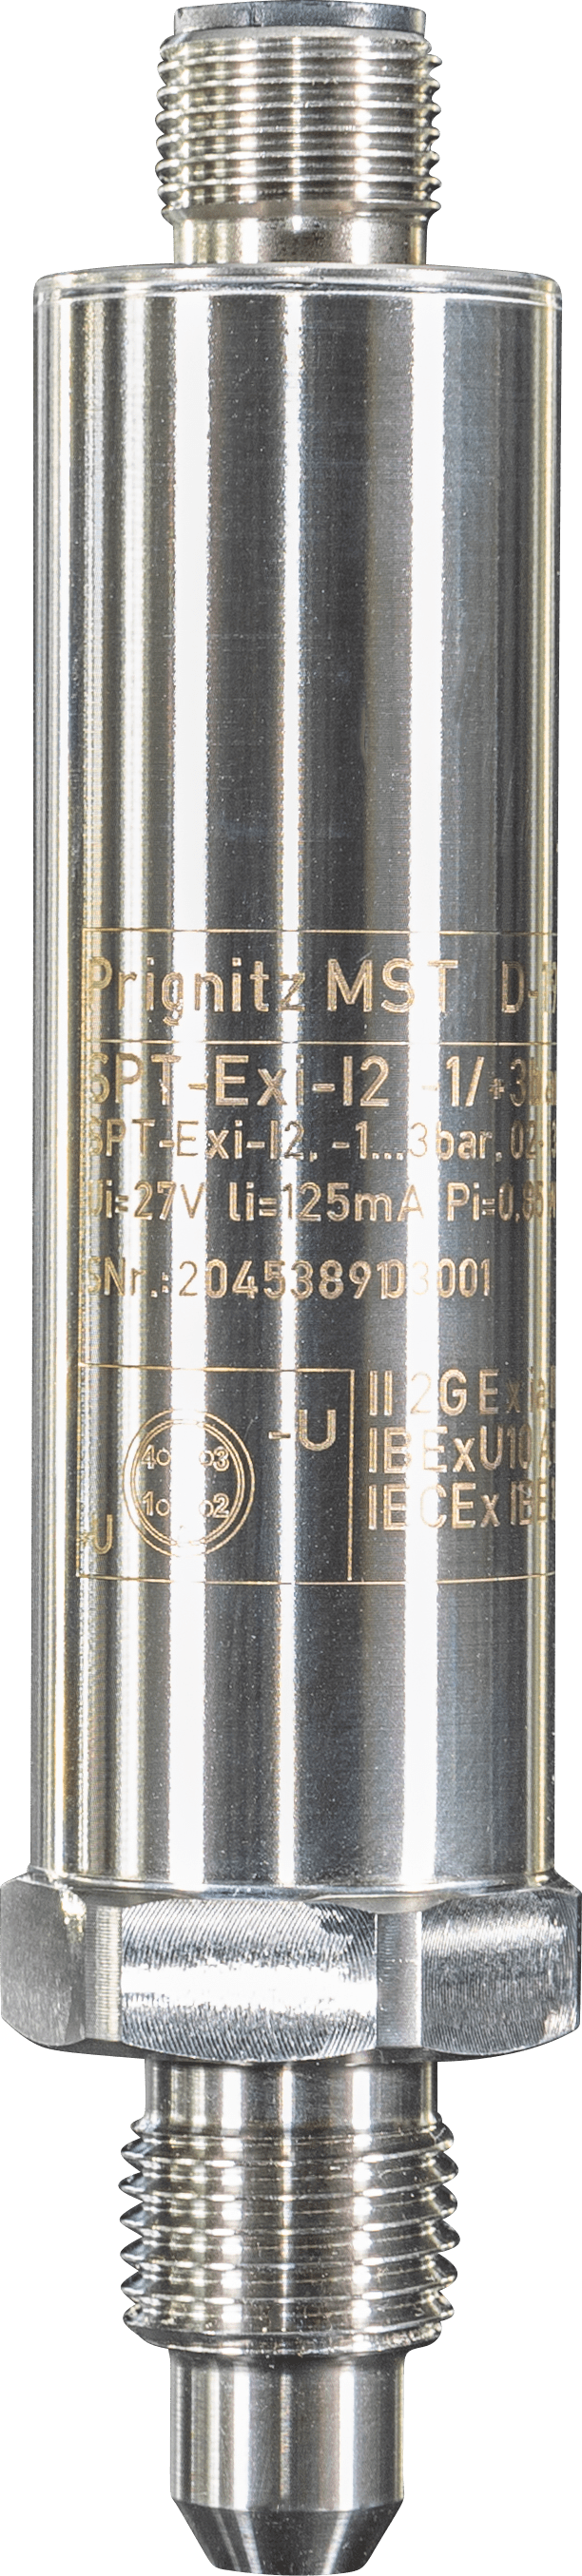 PMP-S100-Exi (Beispiel)